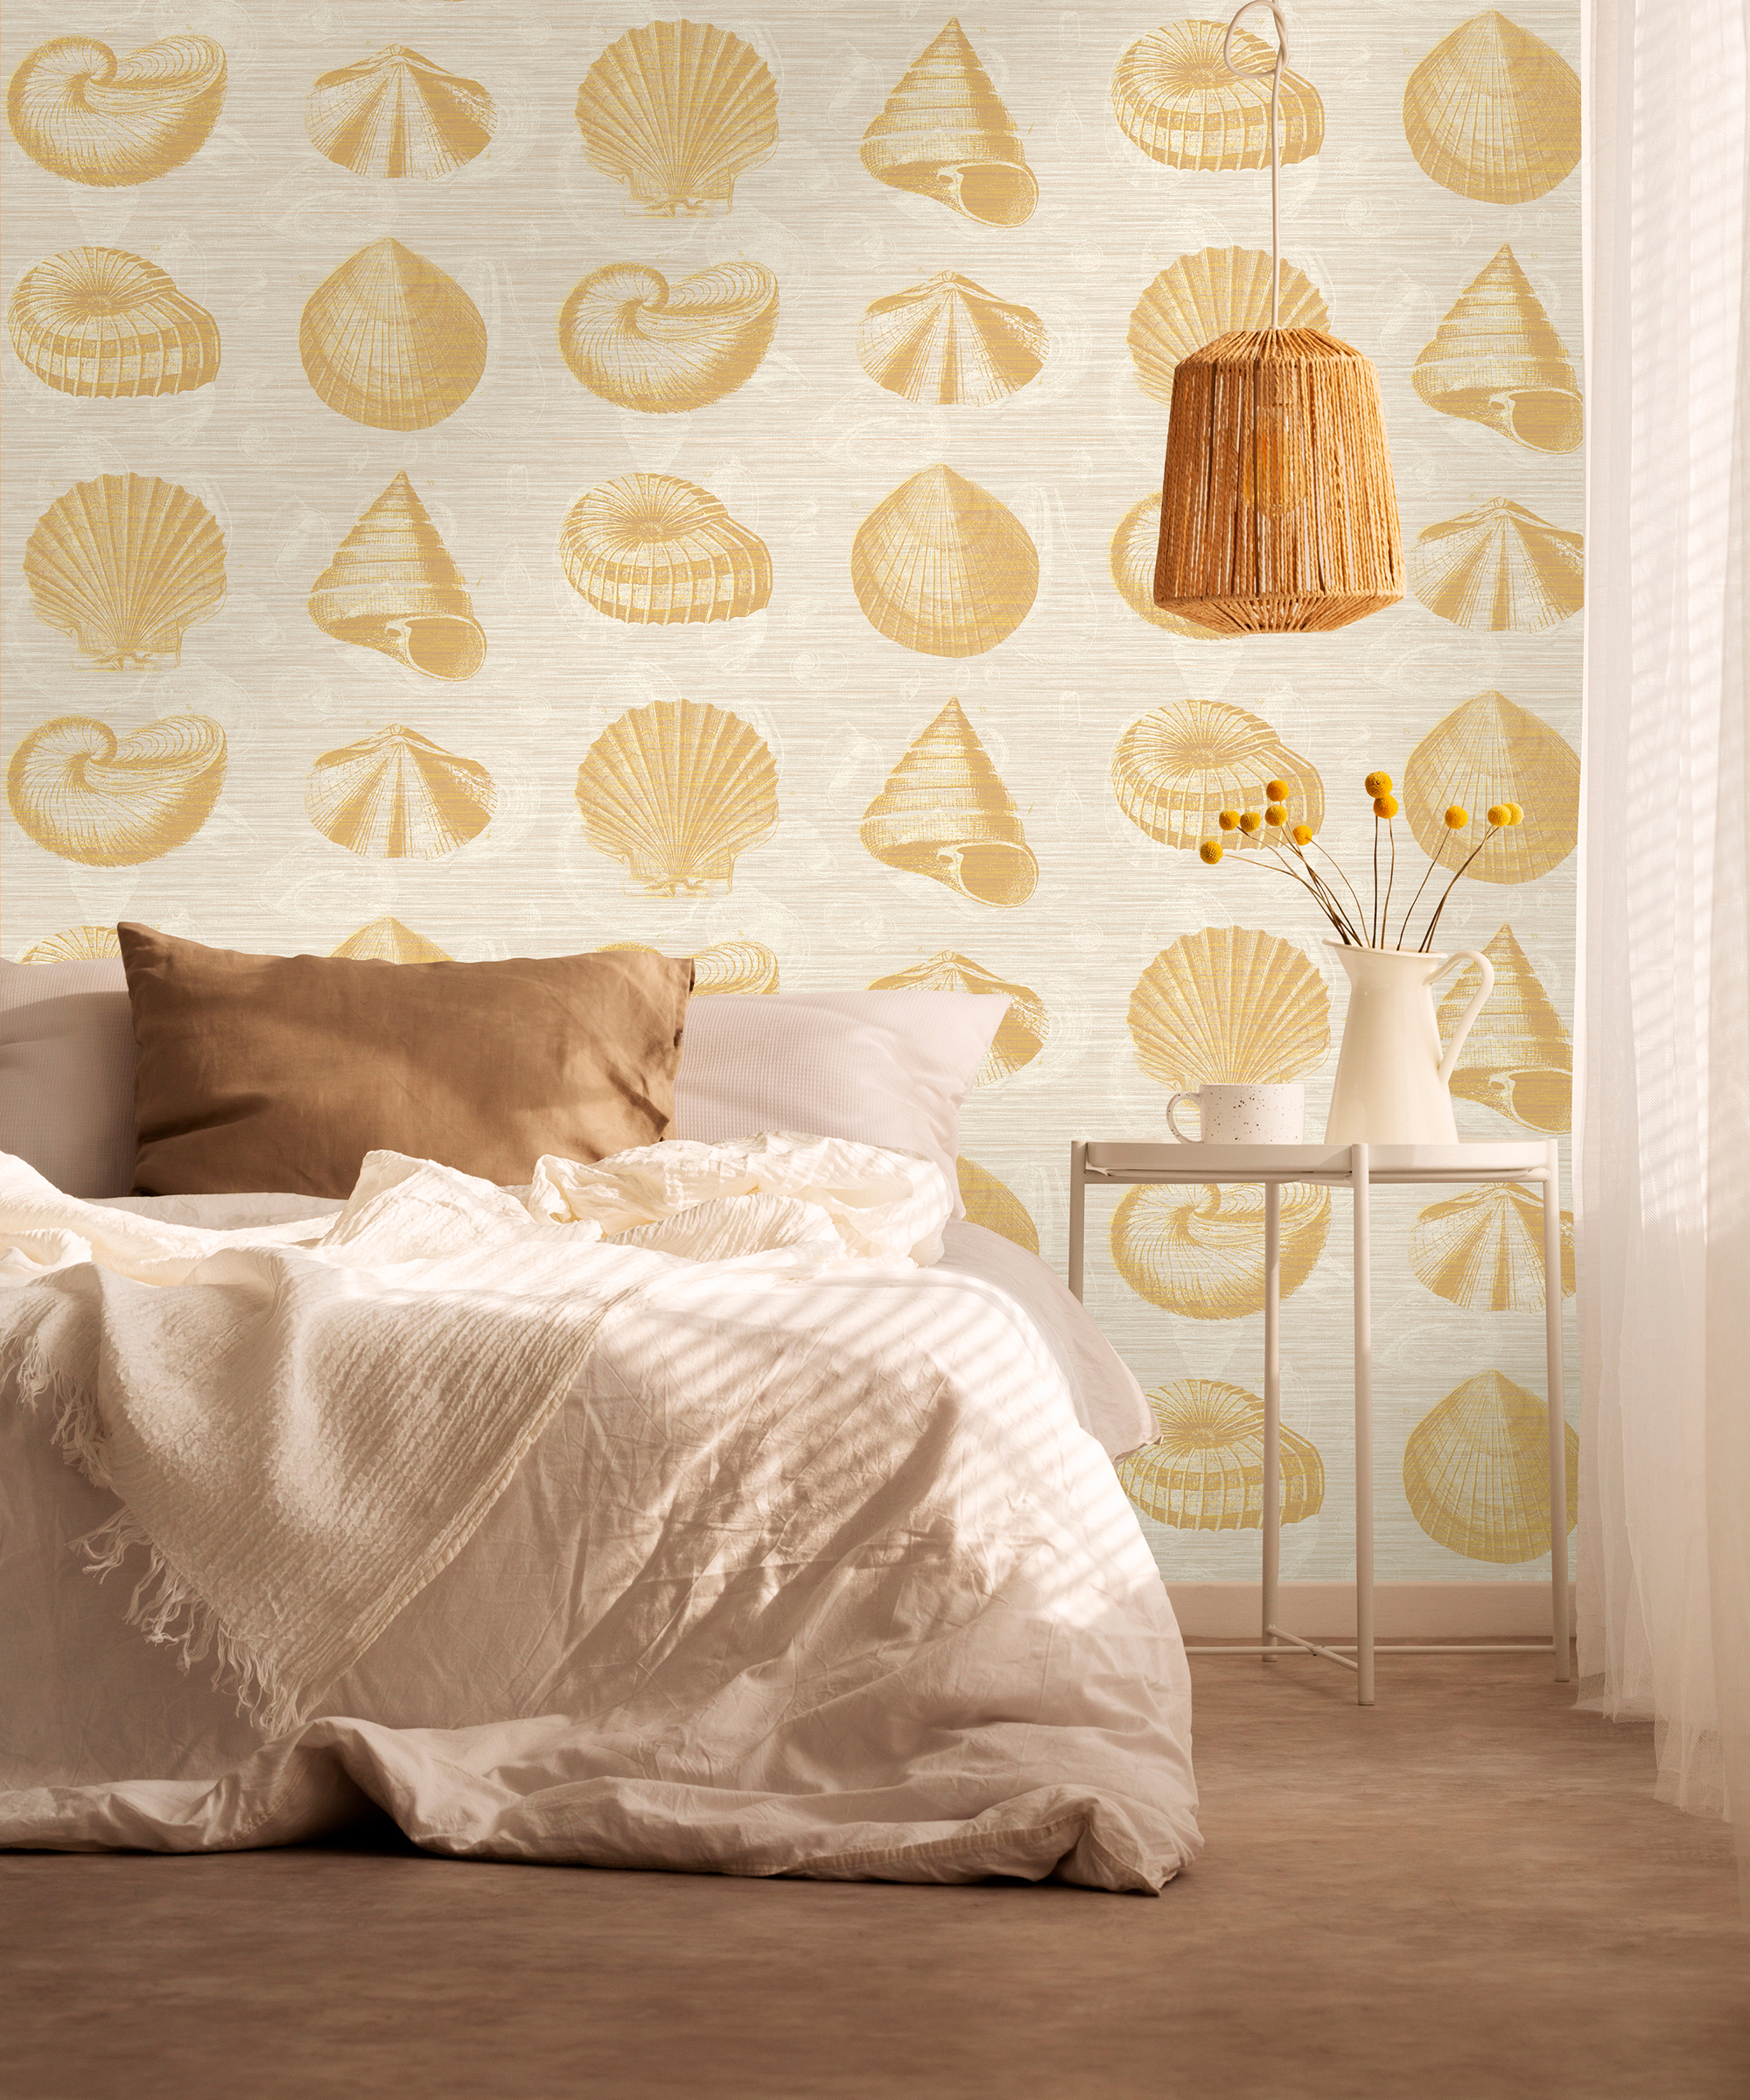 Yellow seashell printed wallpaper design in bedroom by Elizabeth Ockford